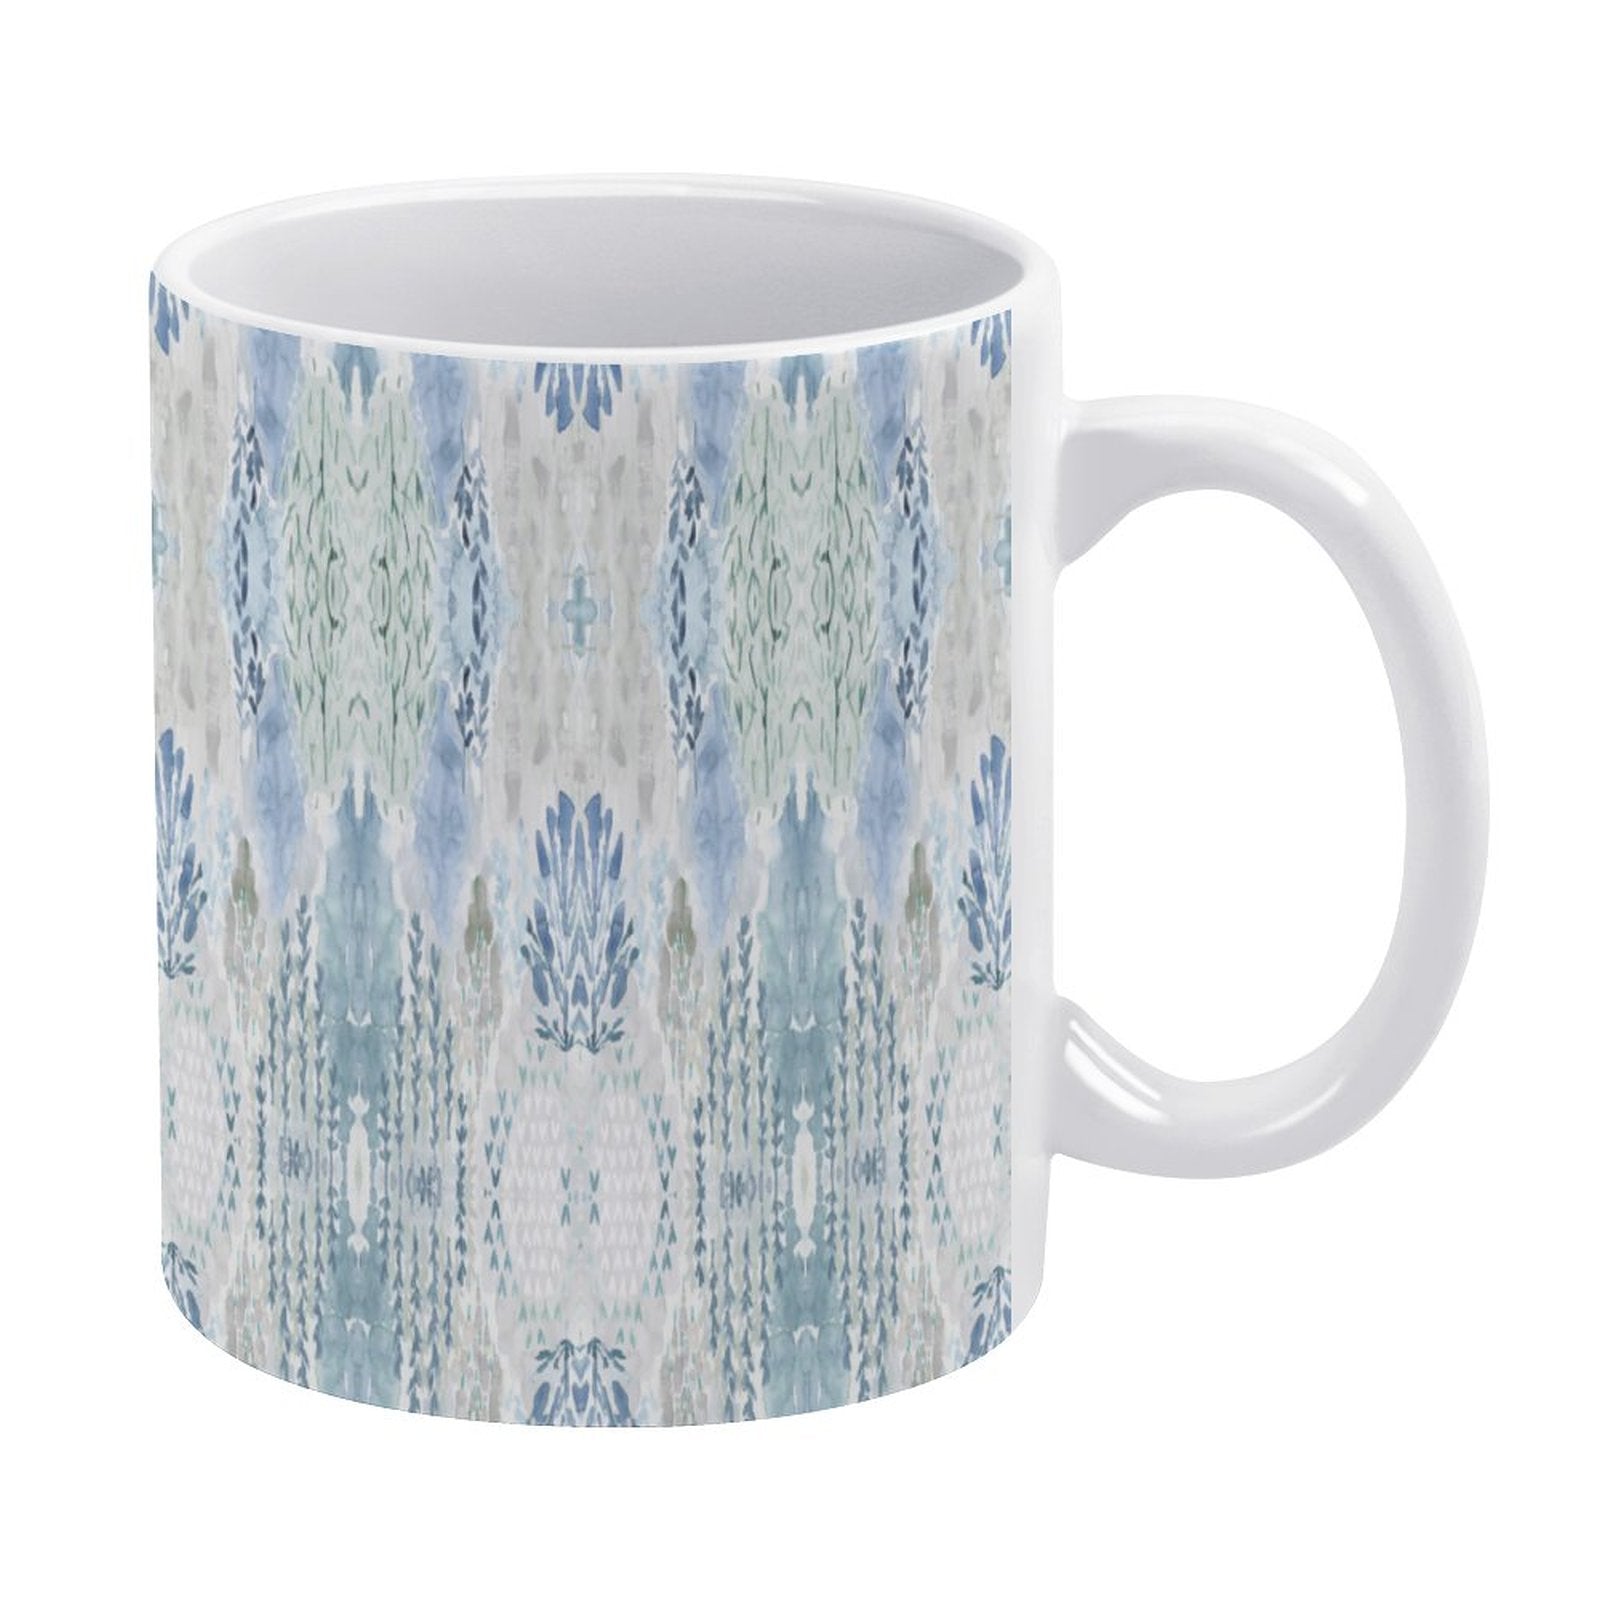 White and blue patterned Mug - Blue Cava